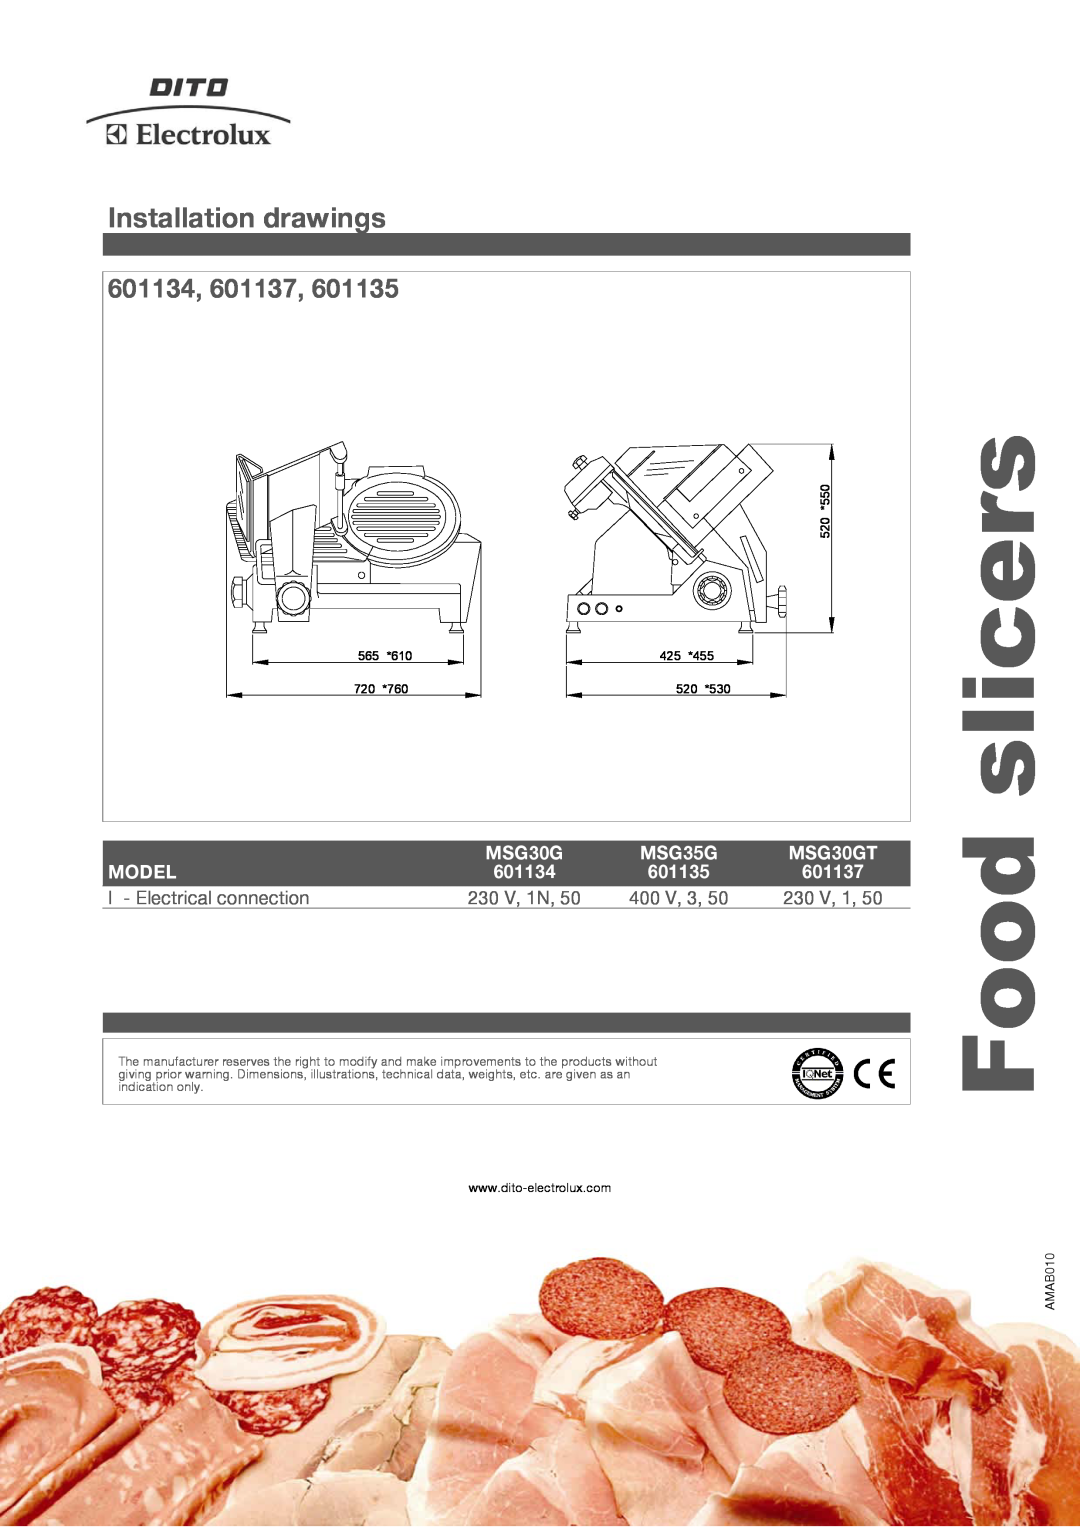 Electrolux Installation drawings, 601134, 601137, slicers, Food, Model, 601135, I - Electrical connection, 230 V, 1N 